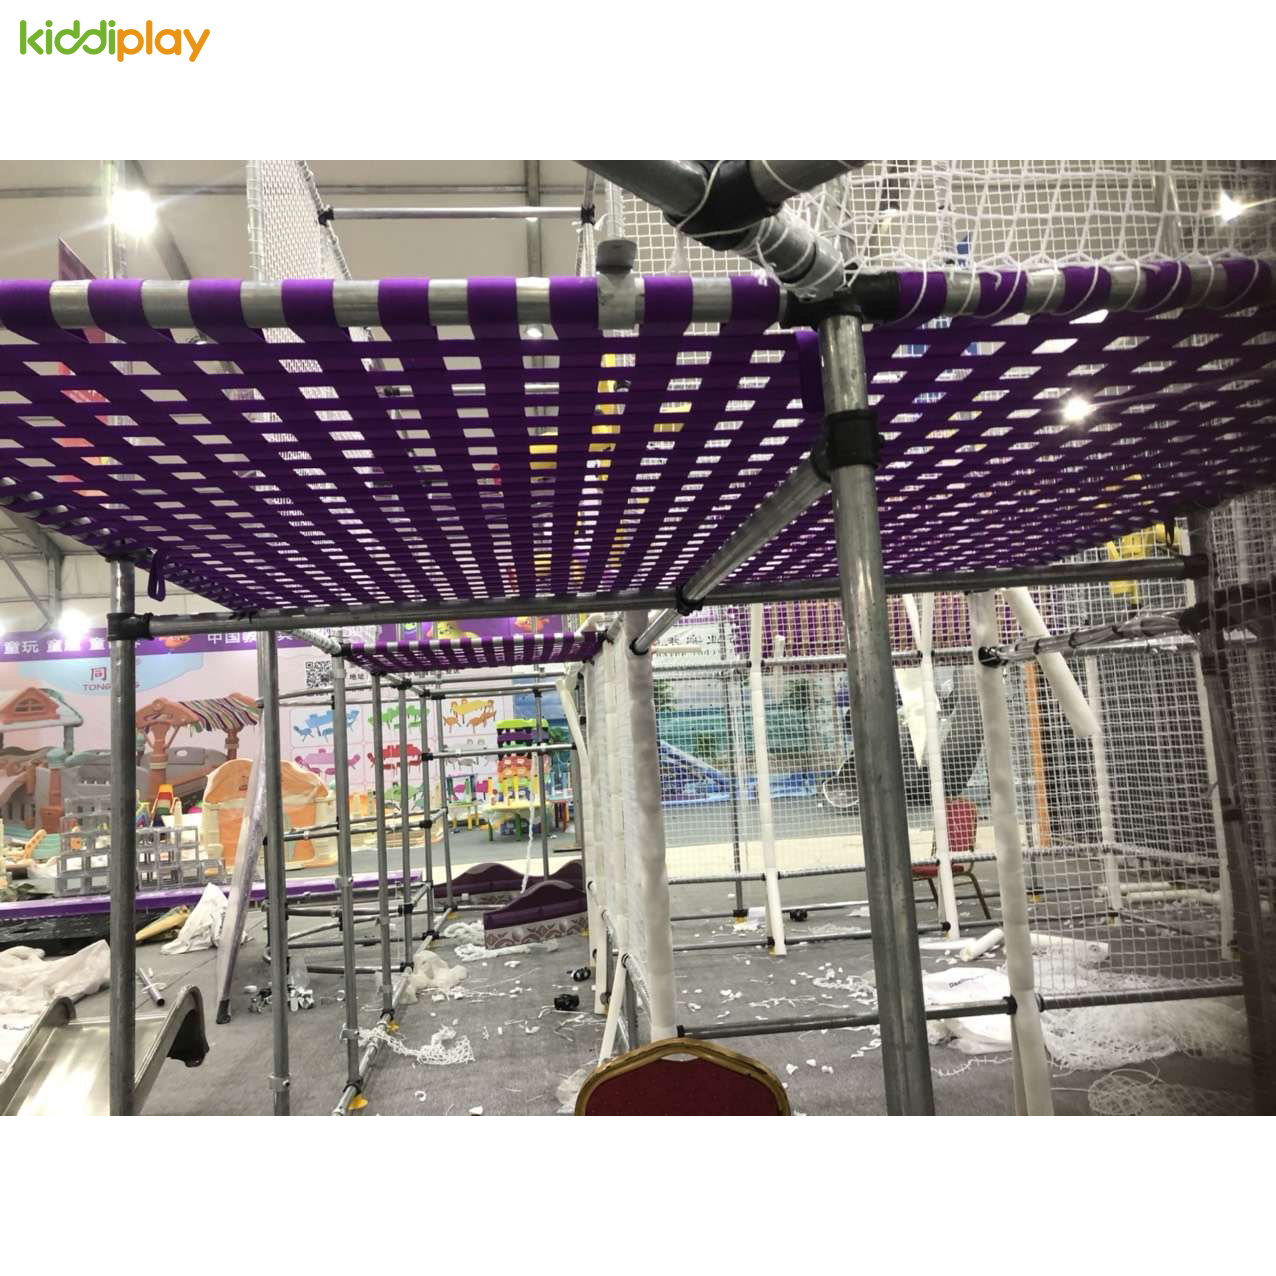 High Strength Nylon Net Deck for Indoor Playground Equipment